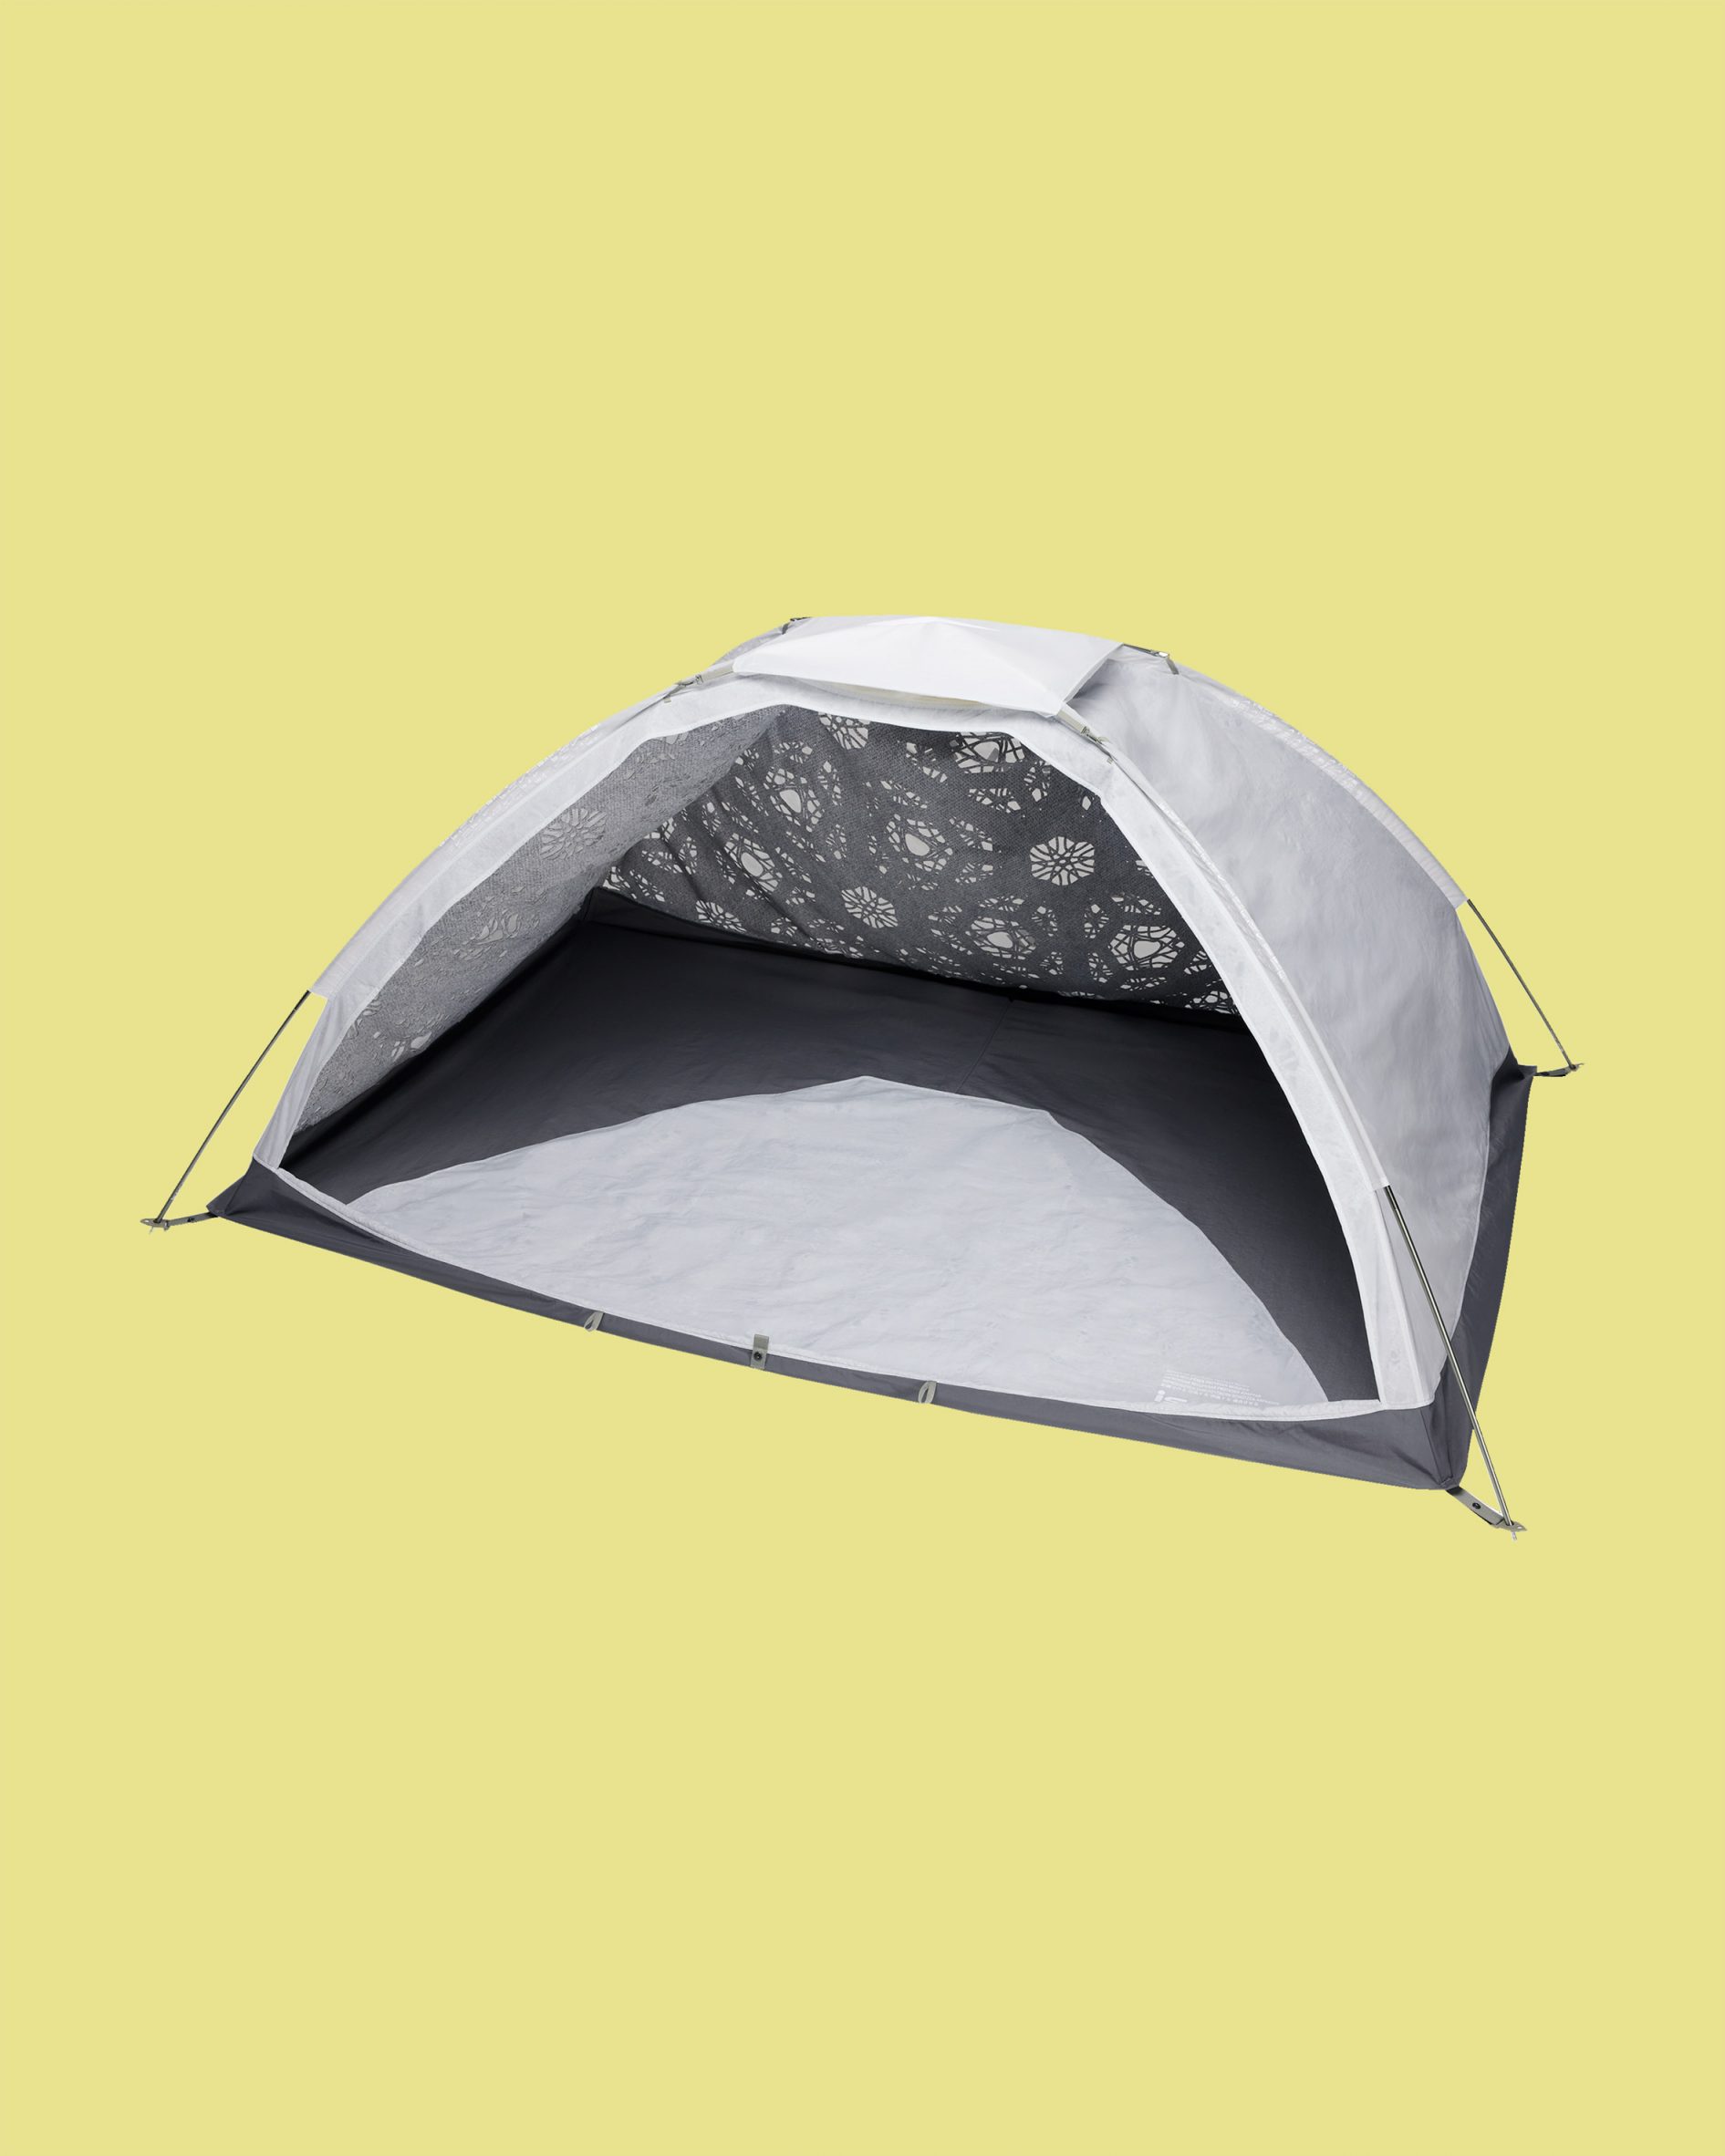 Nike's Metamorph Poncho as a tent